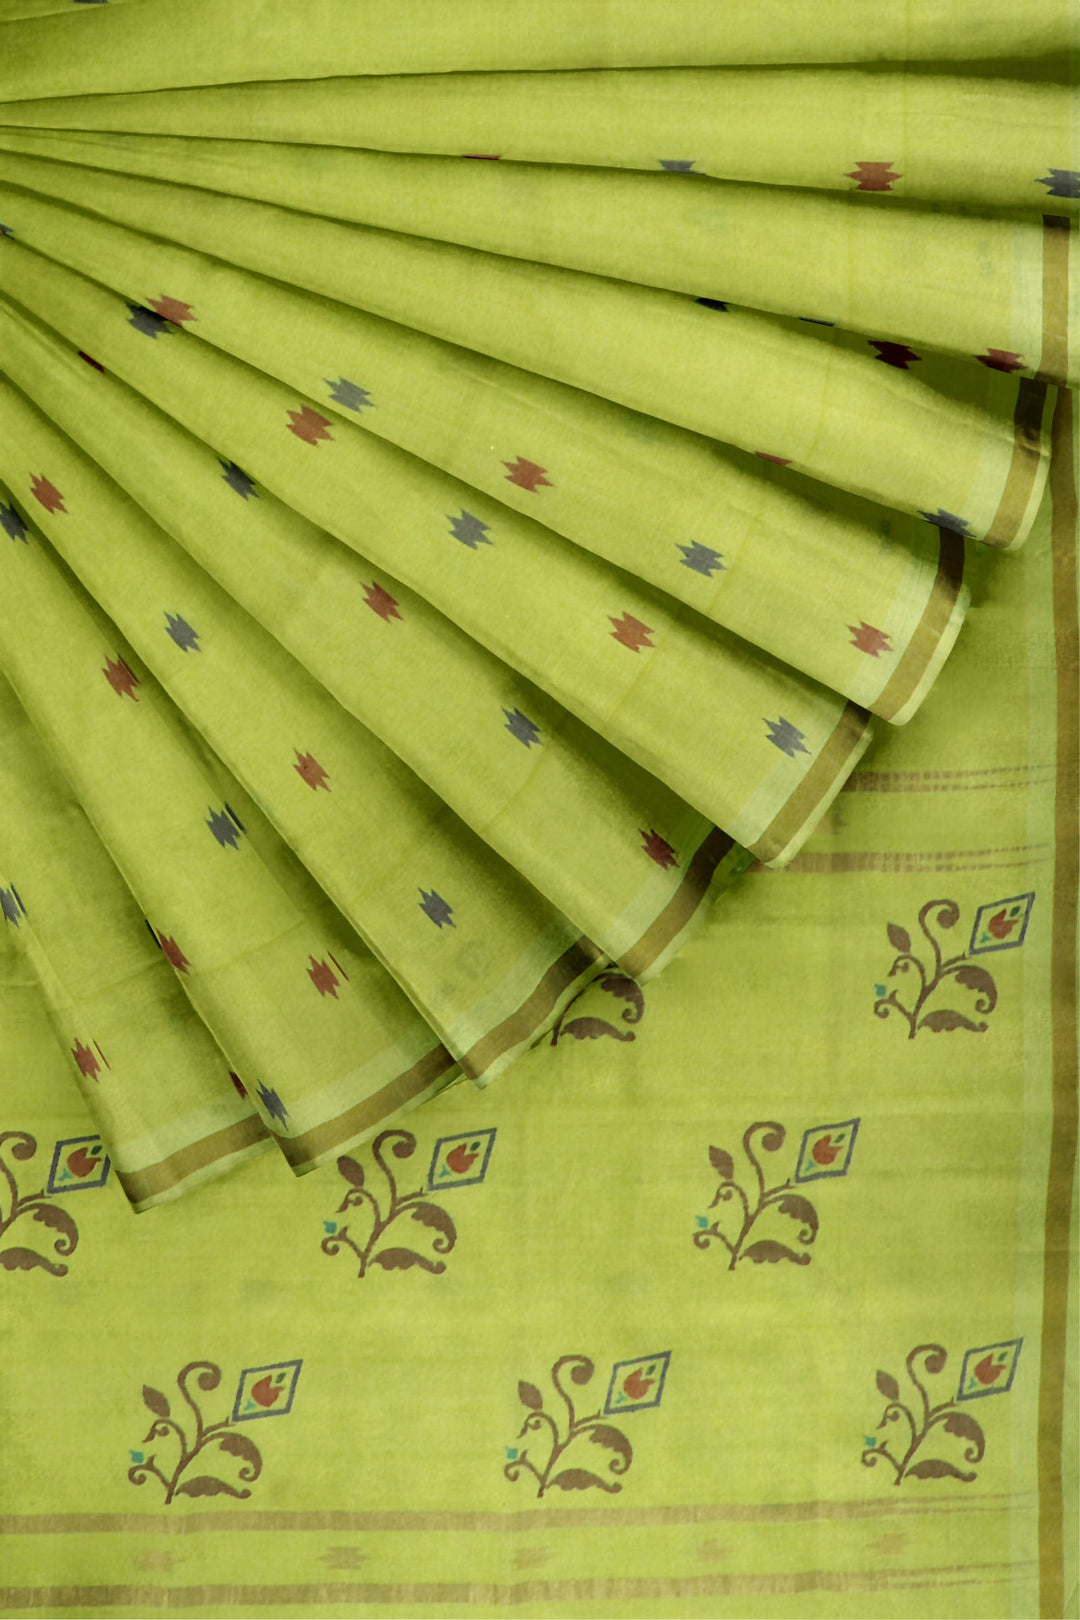 Lime green handloom cotton uppada saree